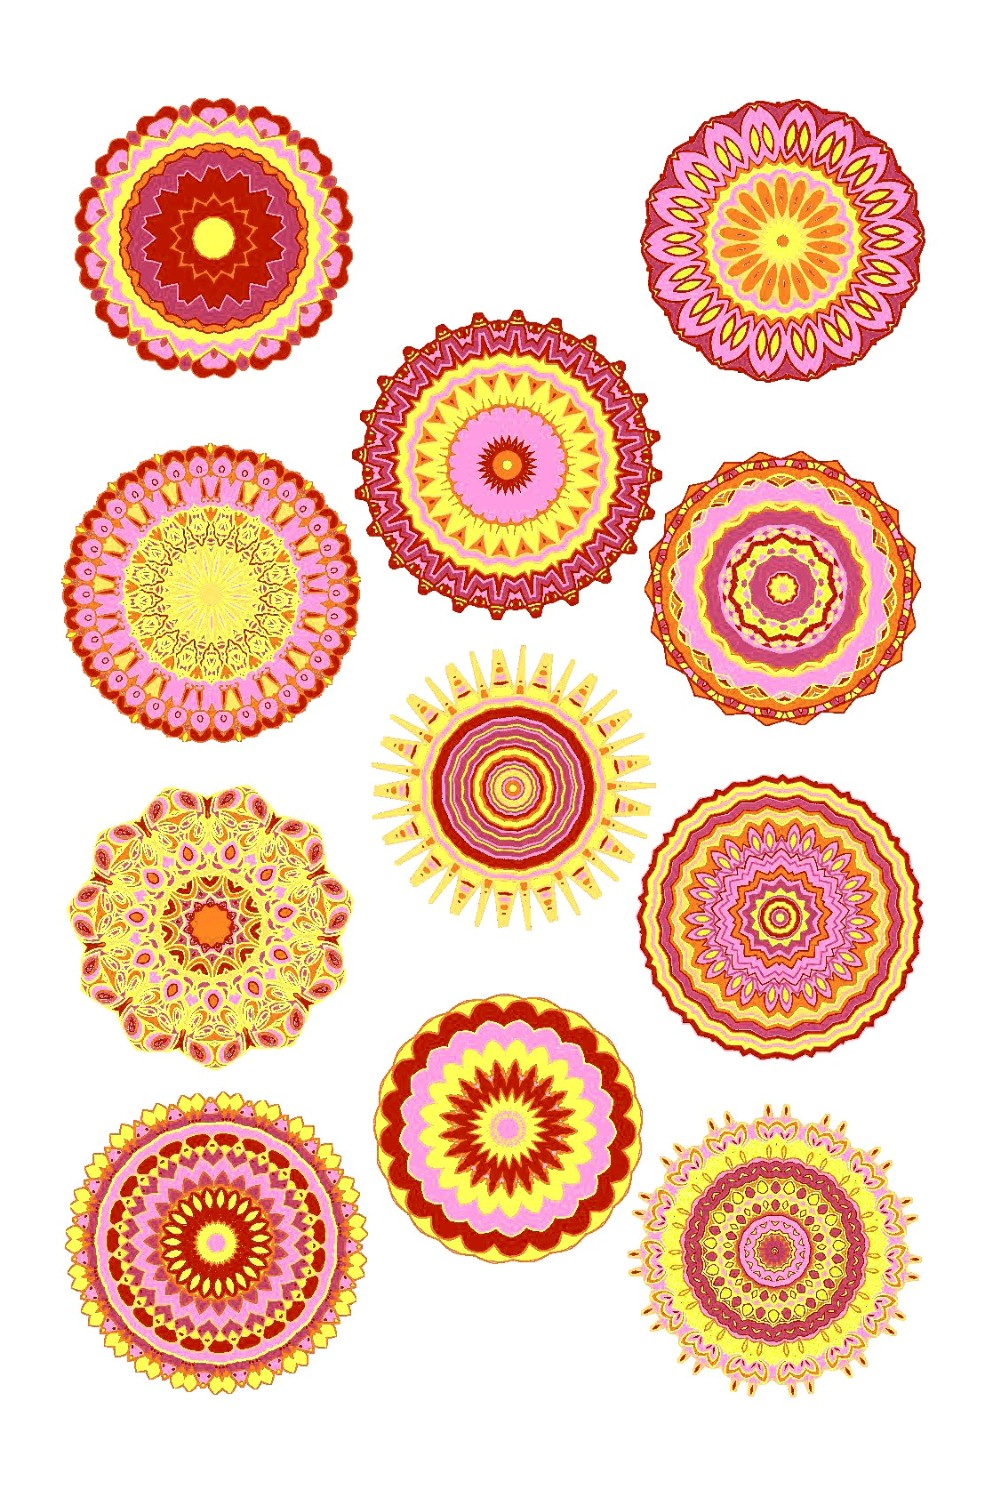 12 Bright Yellow Pink Mandalas pinterest preview image.